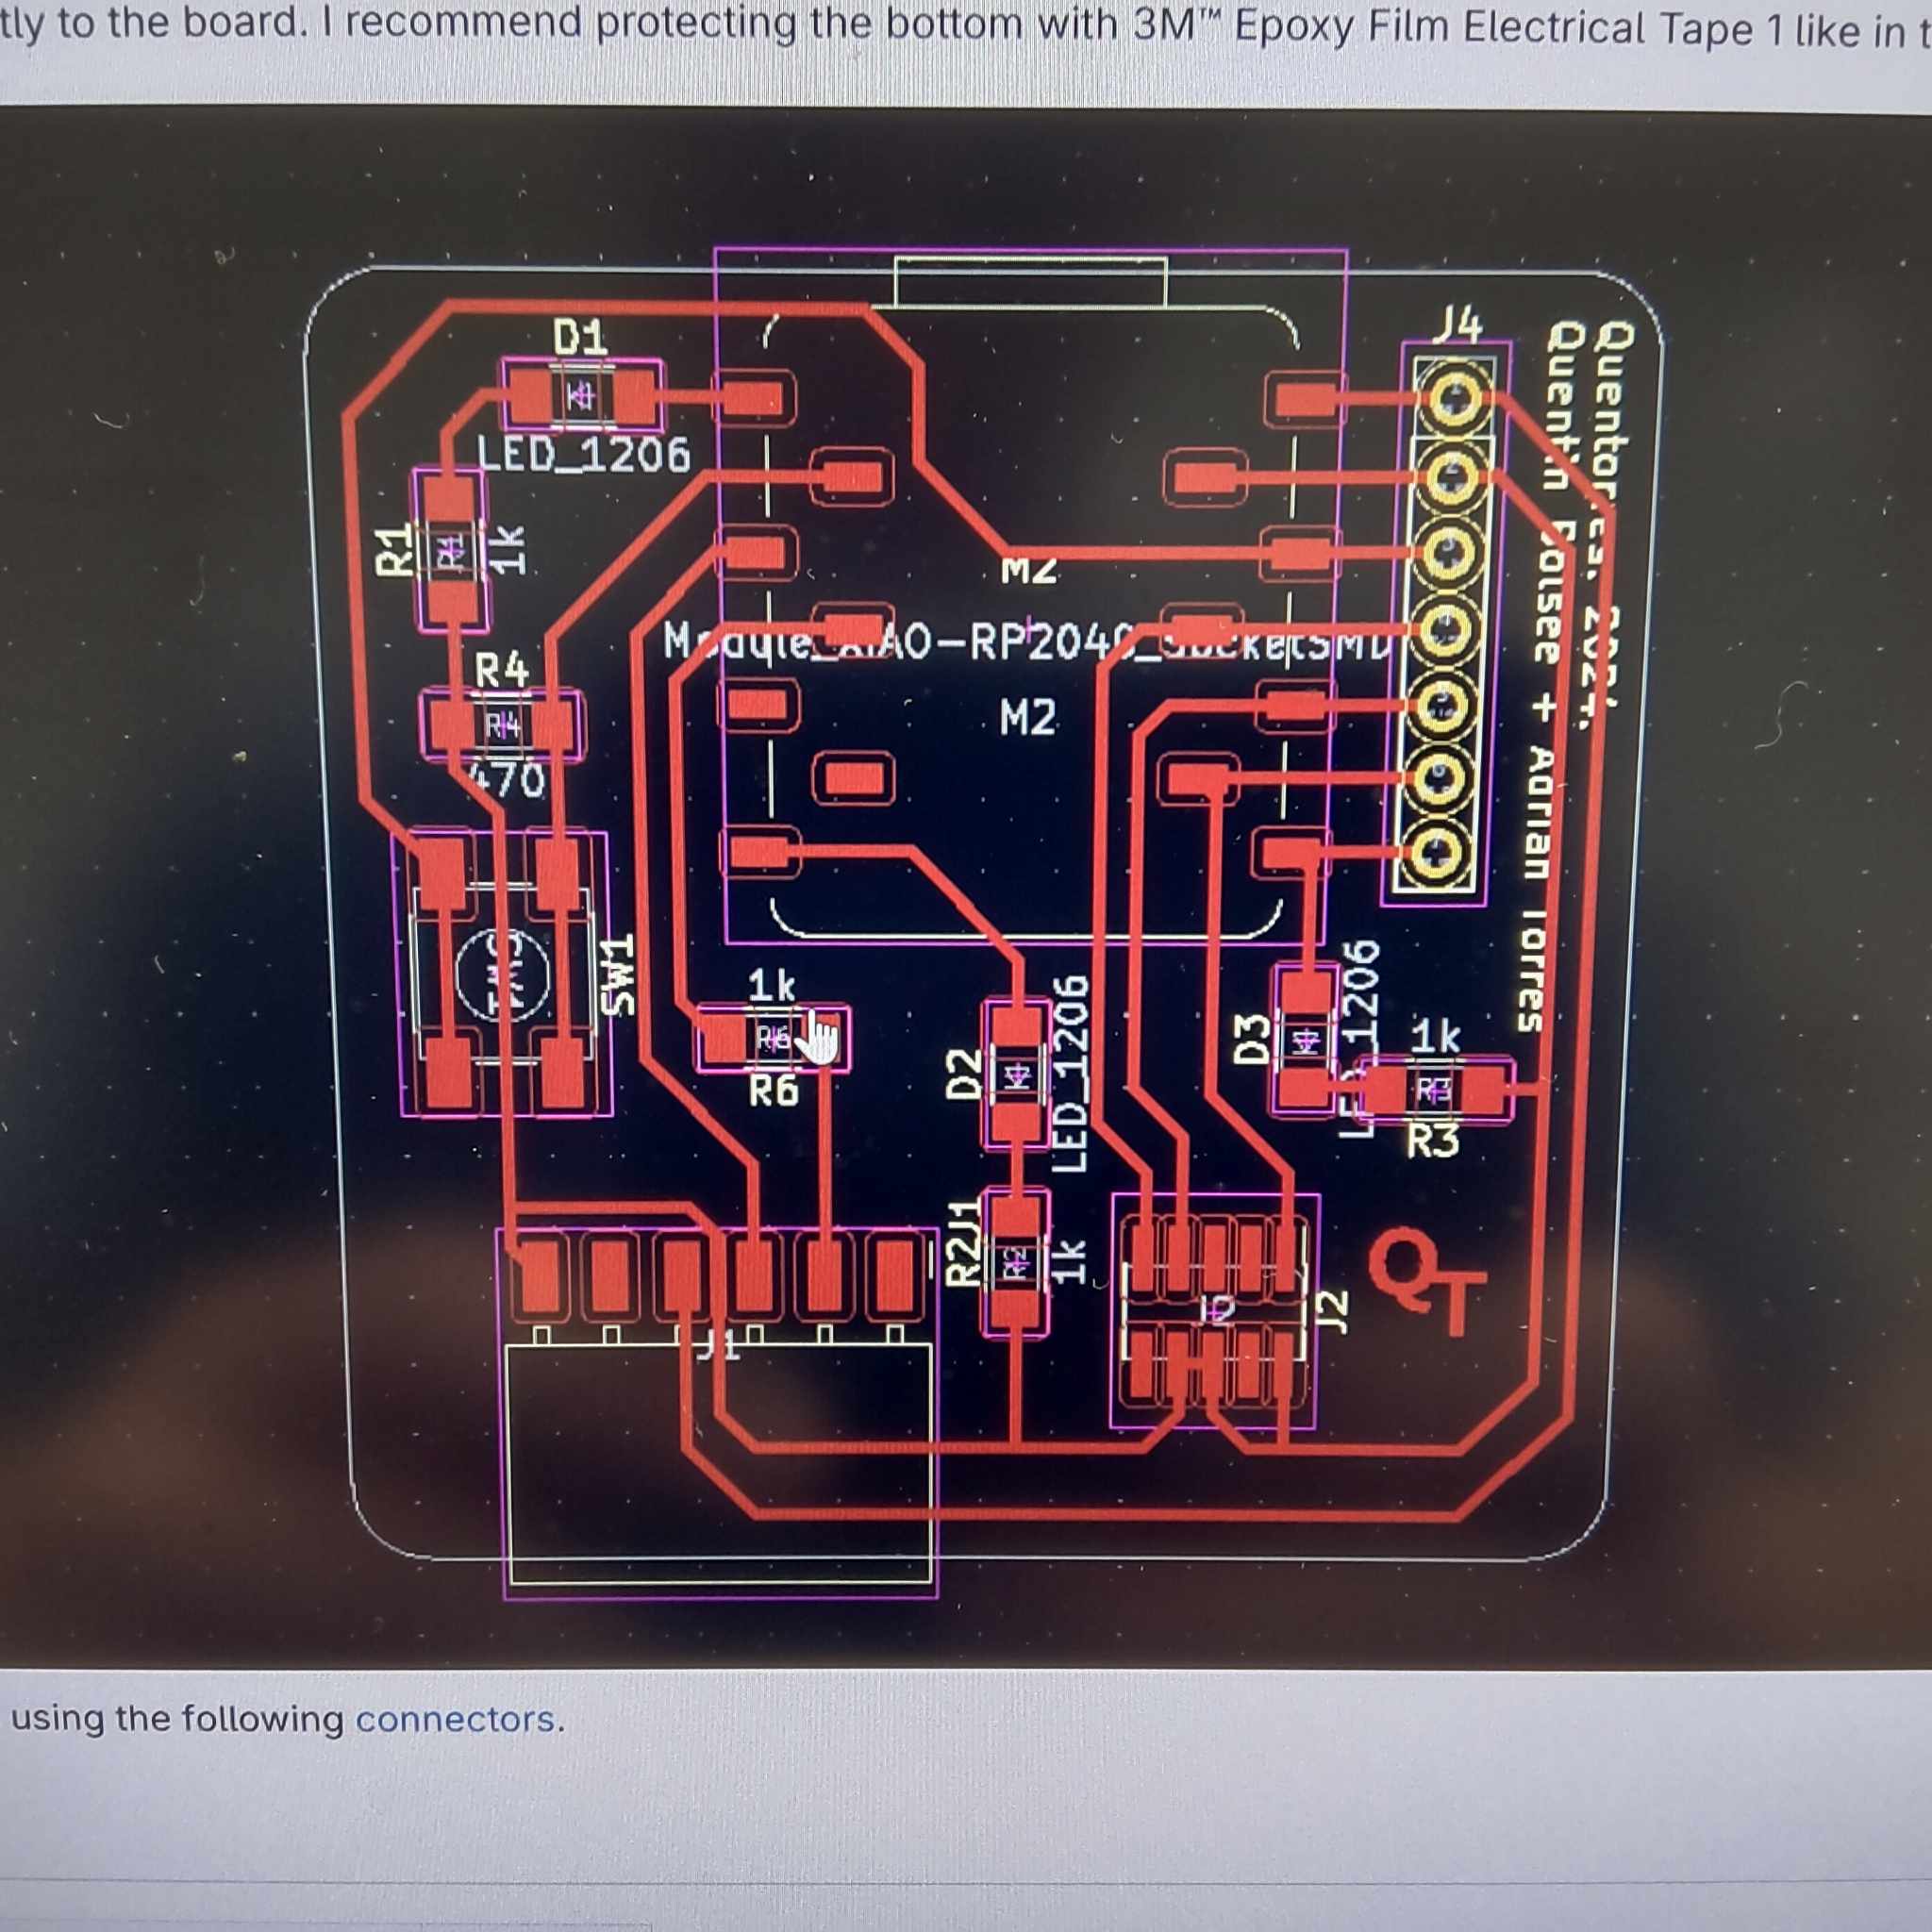 PCB wiring diagram